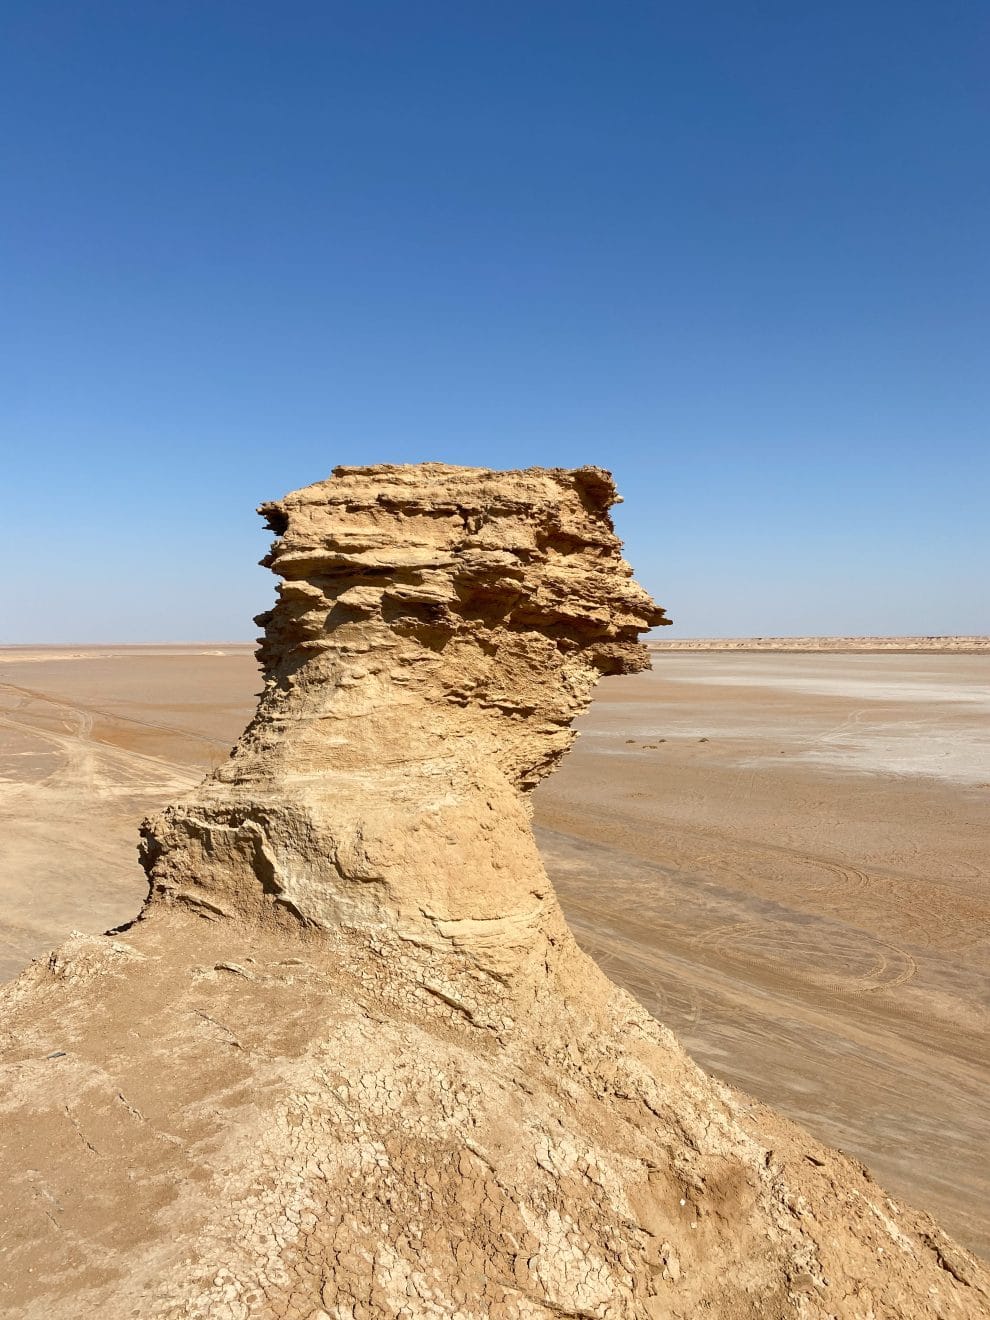 Camel's Neck (Ong Jemel) - Star Wars filmlocaties in Tunesie Tatooine 2022